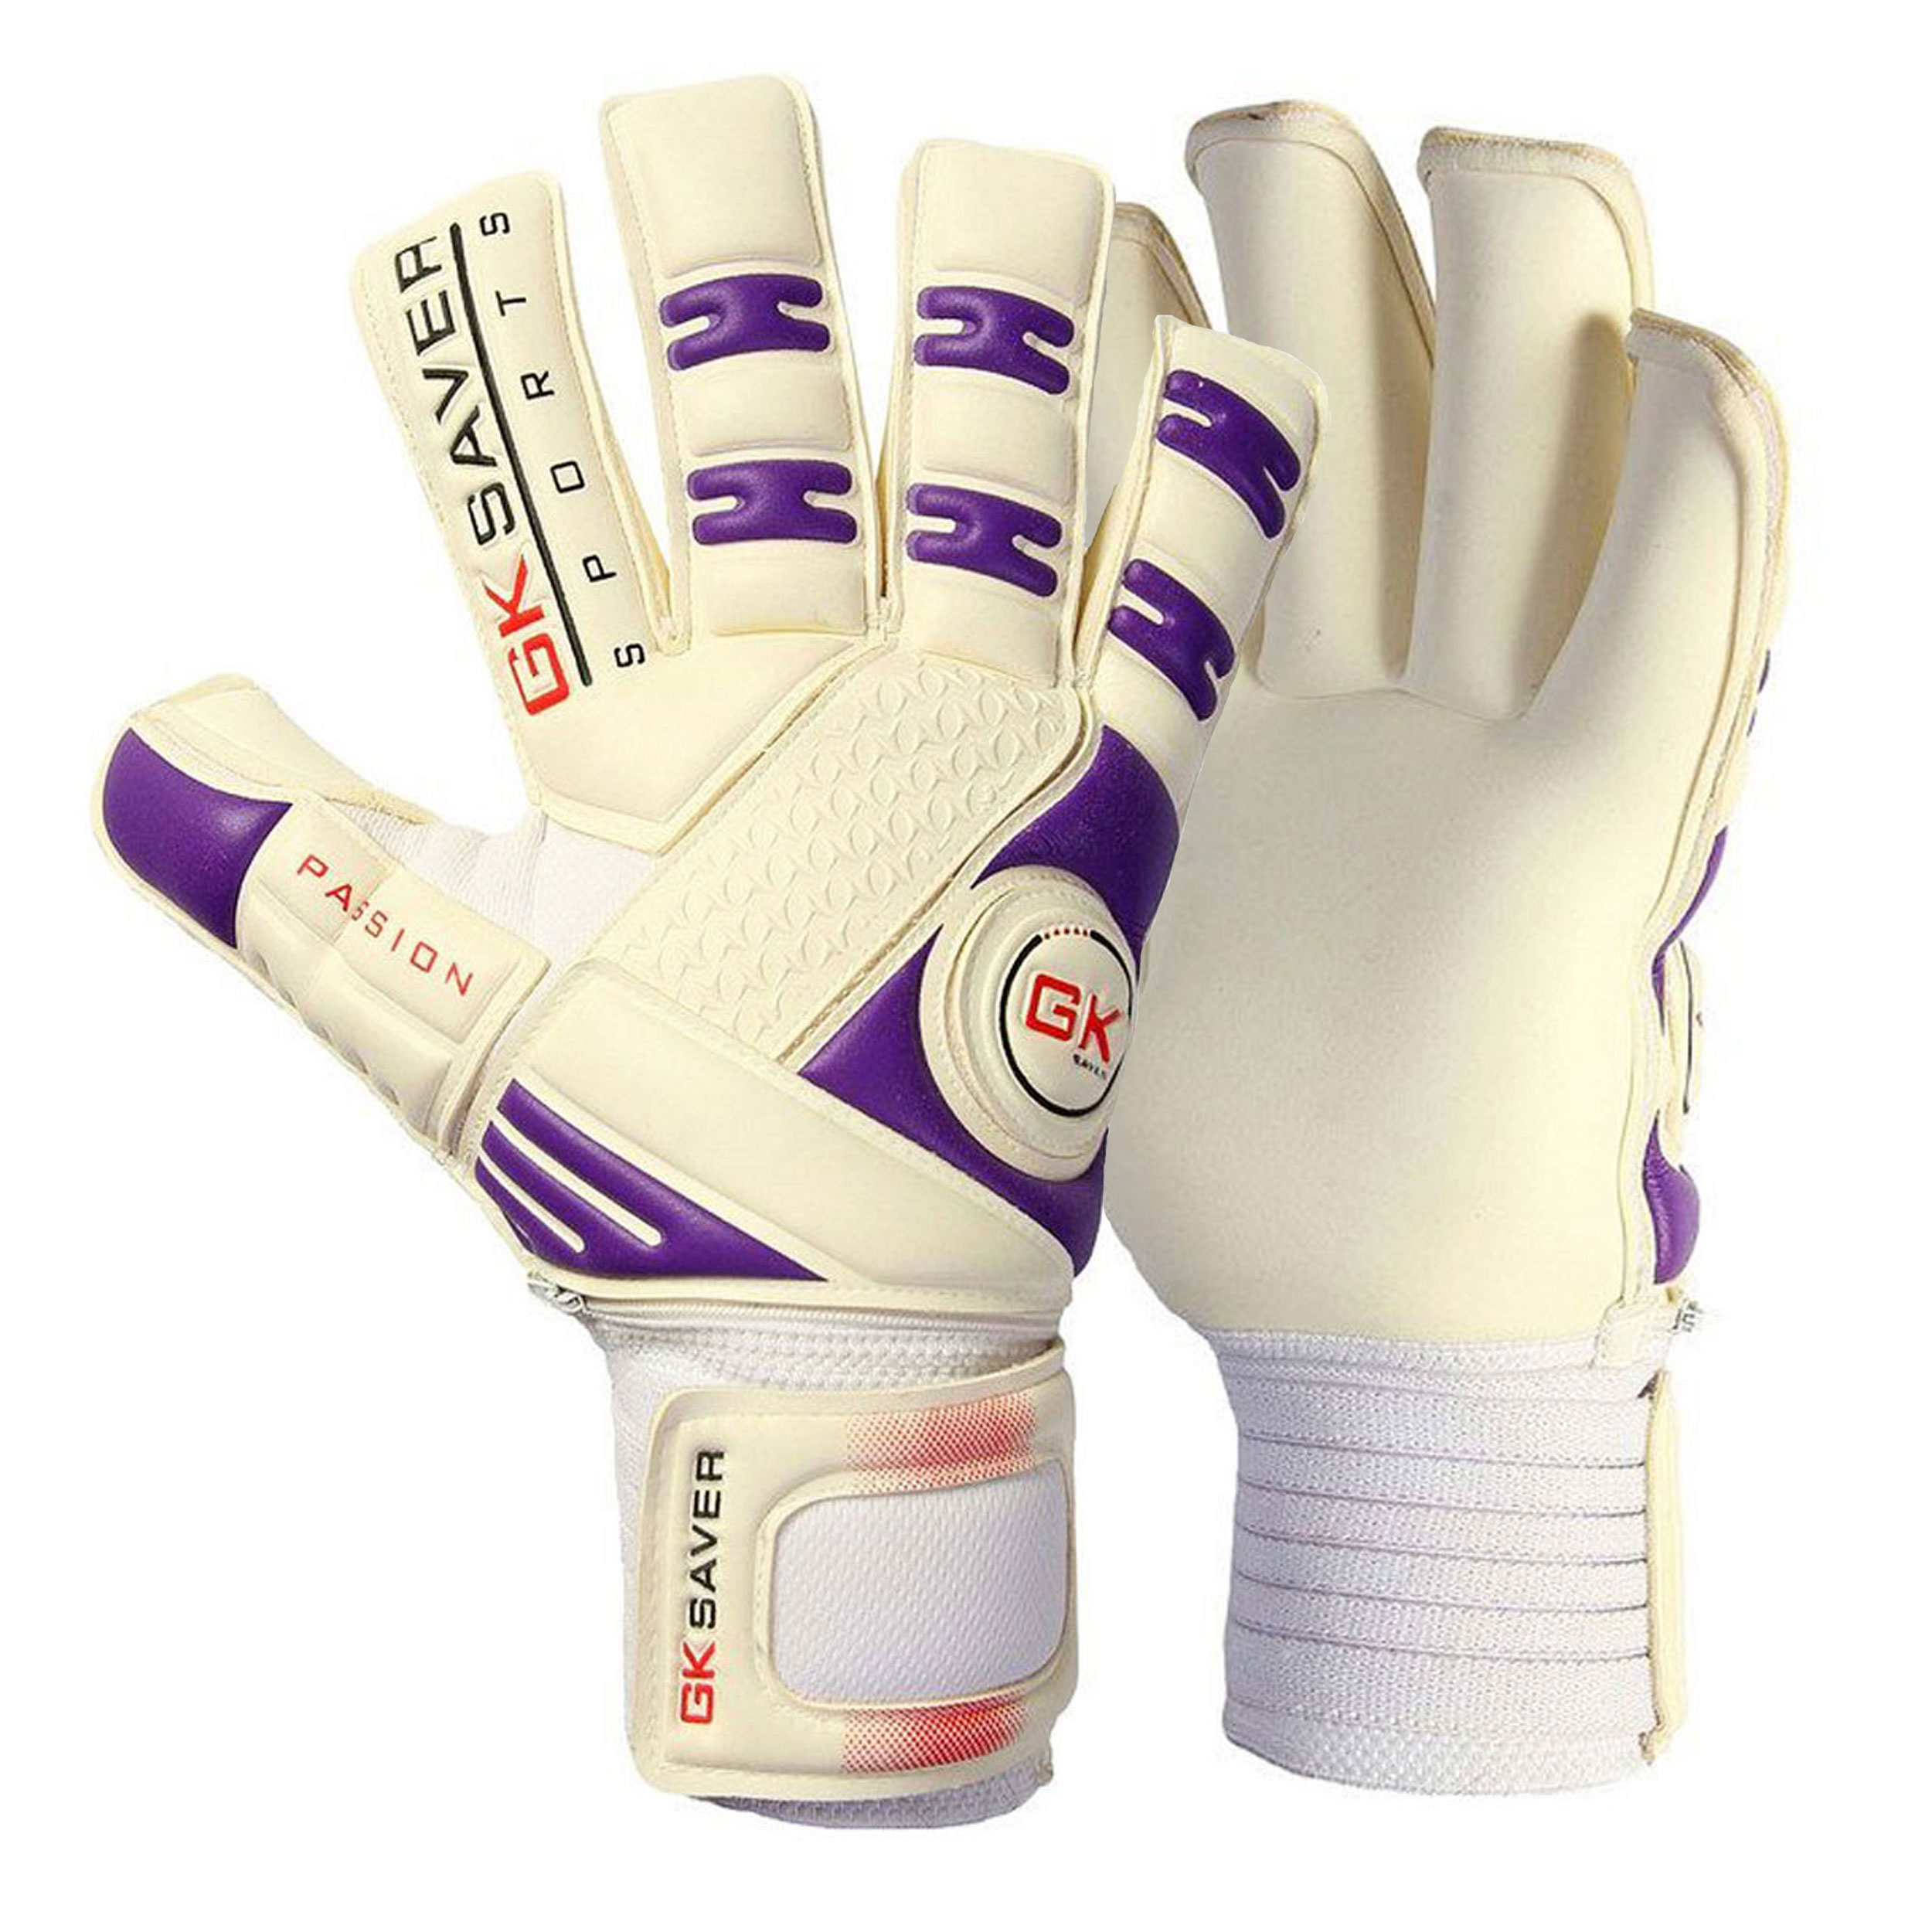 GK Saver Professional Quality Football Goalkeeper Gloves Prime Gold Argo Hybrid Cut Fingersave Gloves 